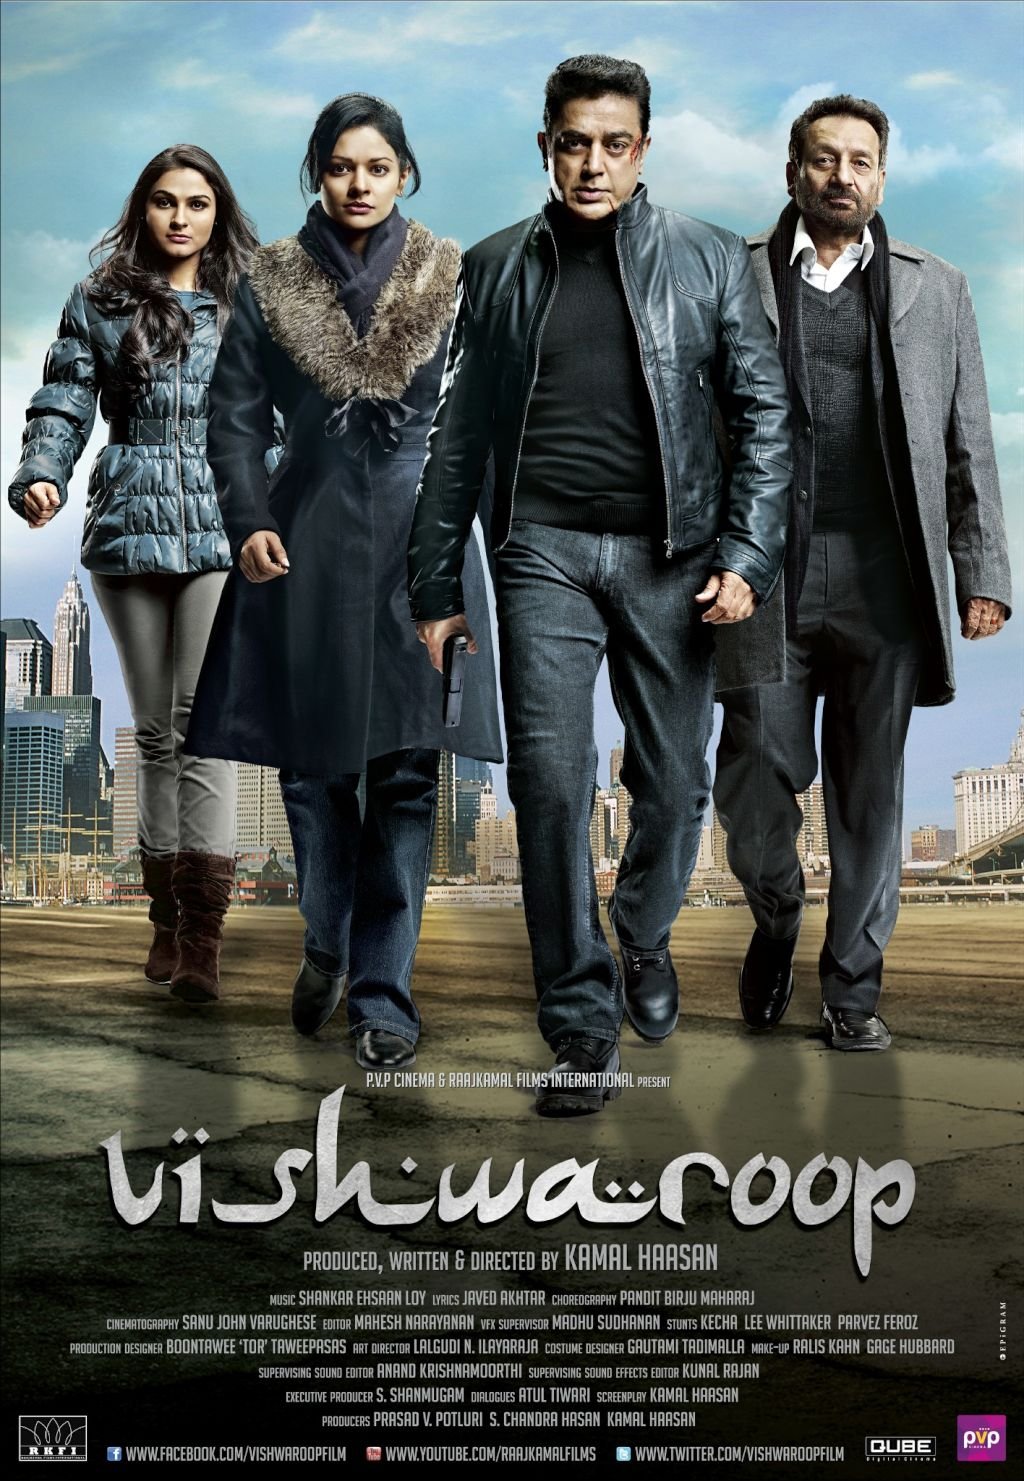 Hindi poster of the movie Vishwaroopam